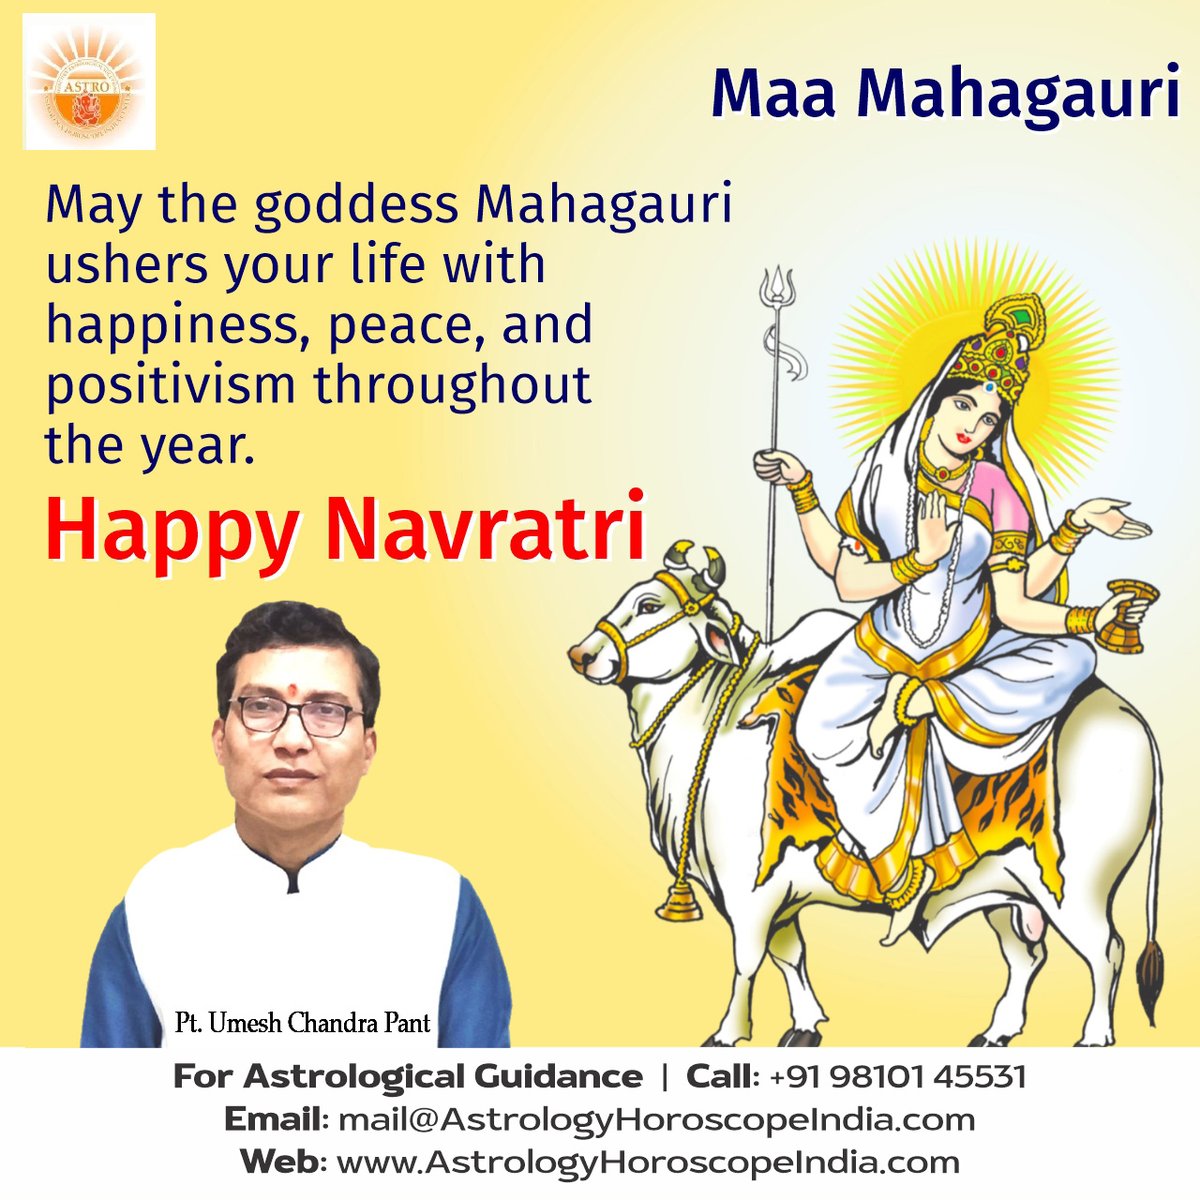 Goddess Mahagauri is the eighth avatar of Goddess Durga, worshipped on the eighth day of Navratri. 

#AstrologyHoroscopeIndia #मां_महागौरी #Mahagauri #Navratri #Festival #GoddessEighthDayOfNavratri #MaaDurga #MaaMahagauriPuja #JayAmbe #GoddessDurga #DurgaPuja2024